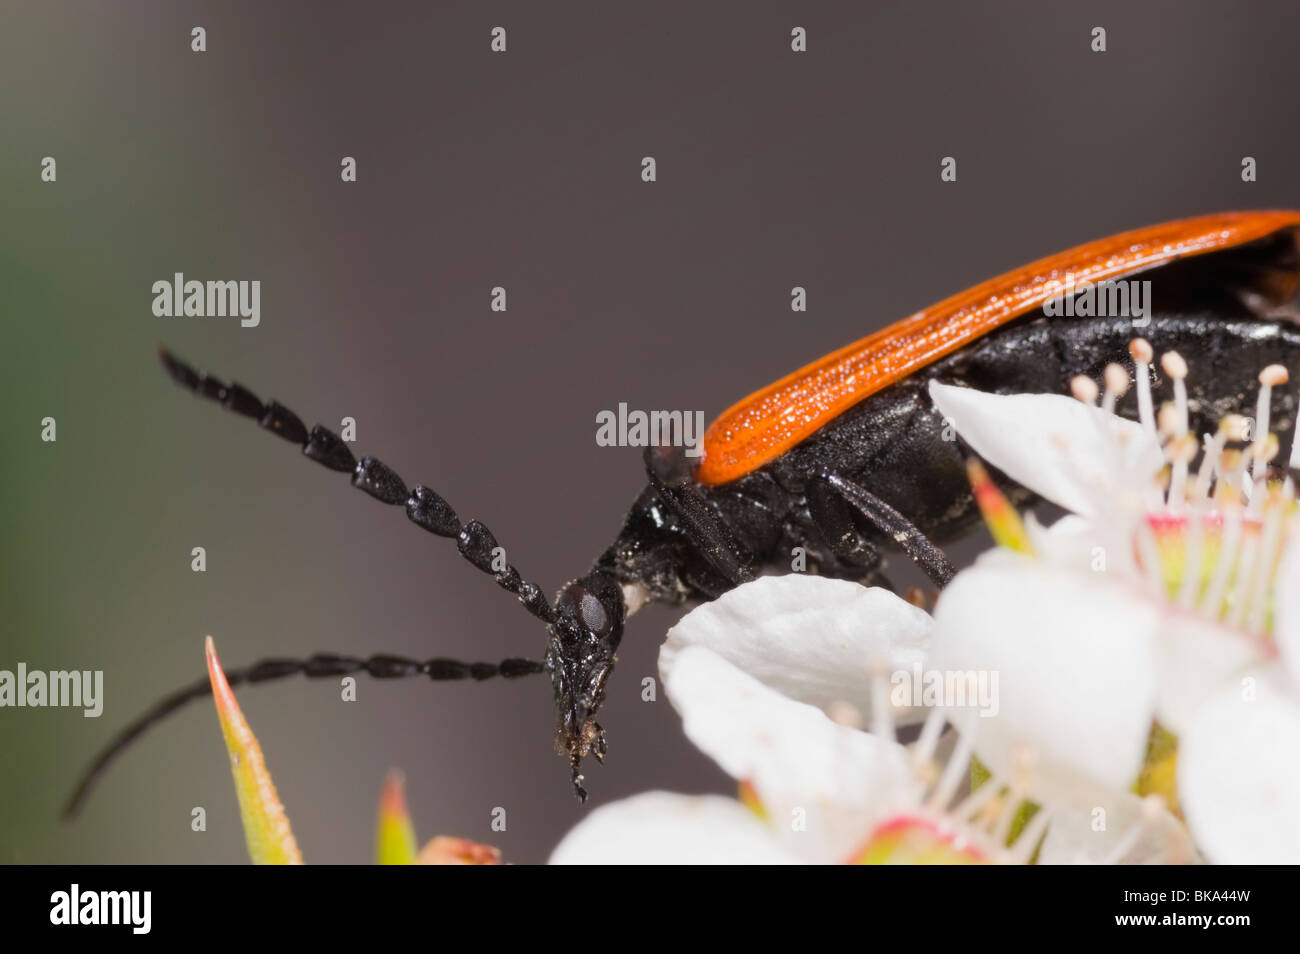 Orange and black lycid beetle which feeds on nectar Stock Photo